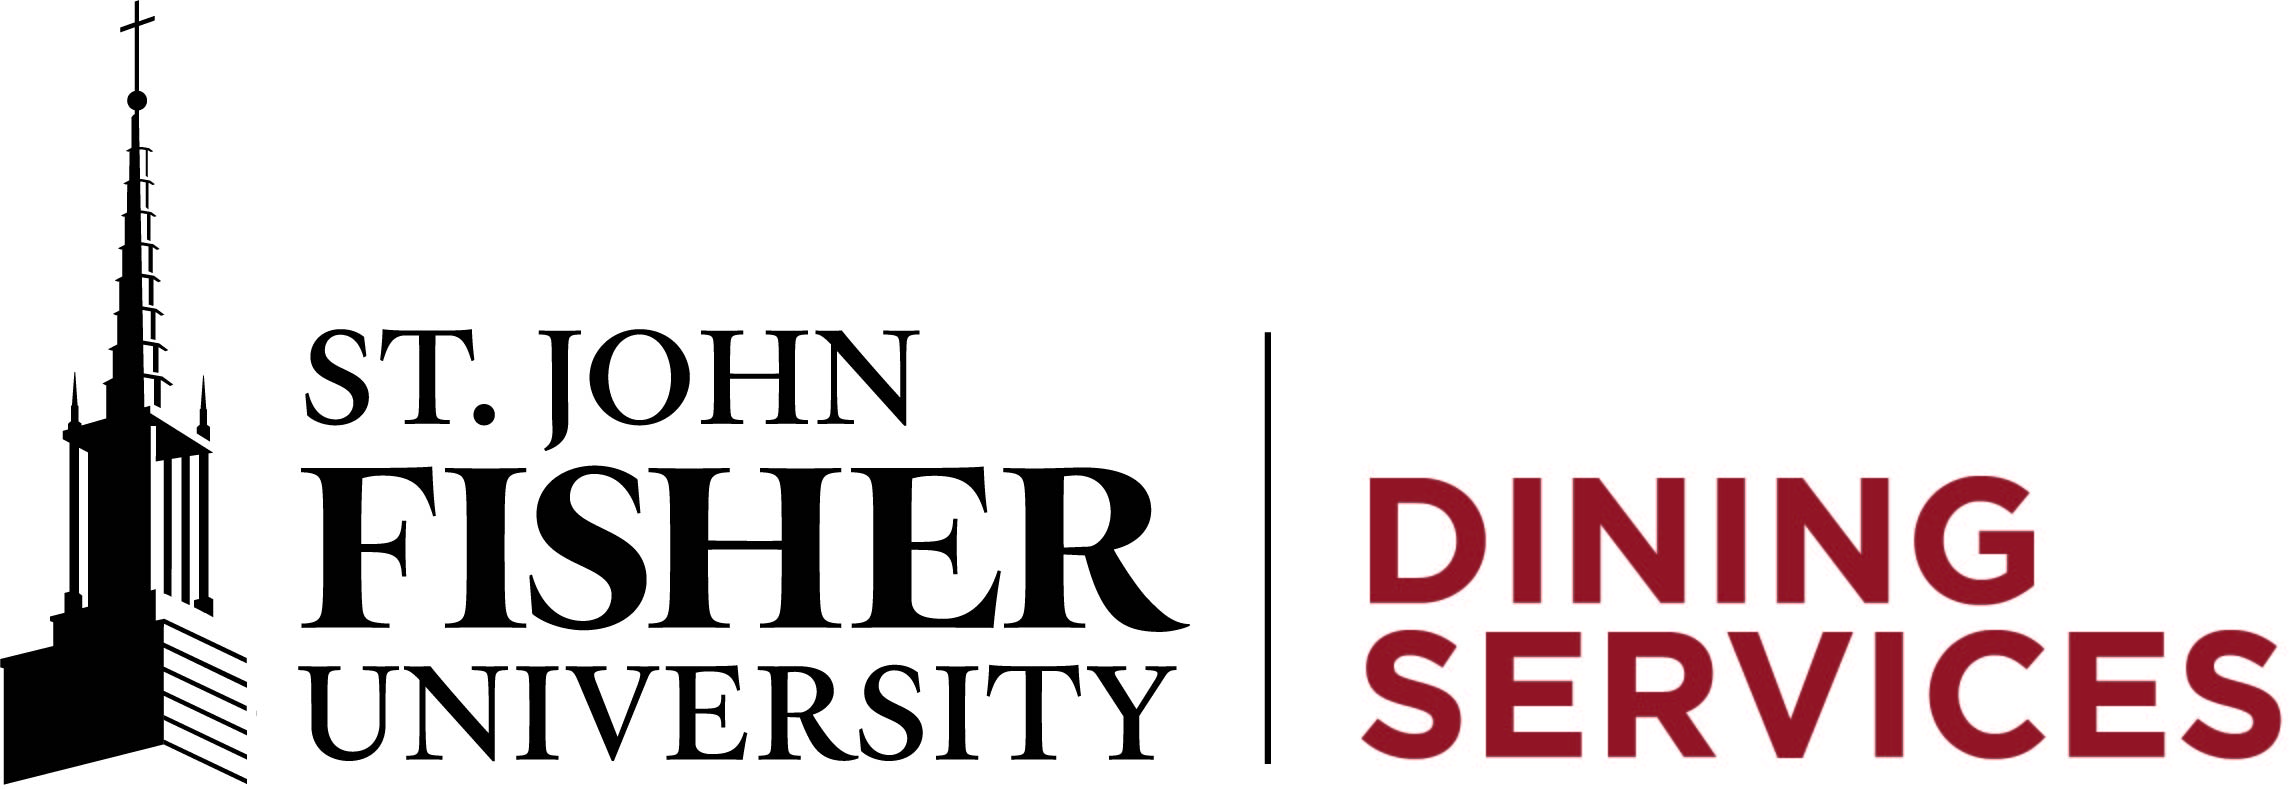 Home  Visit - St. John Fisher University